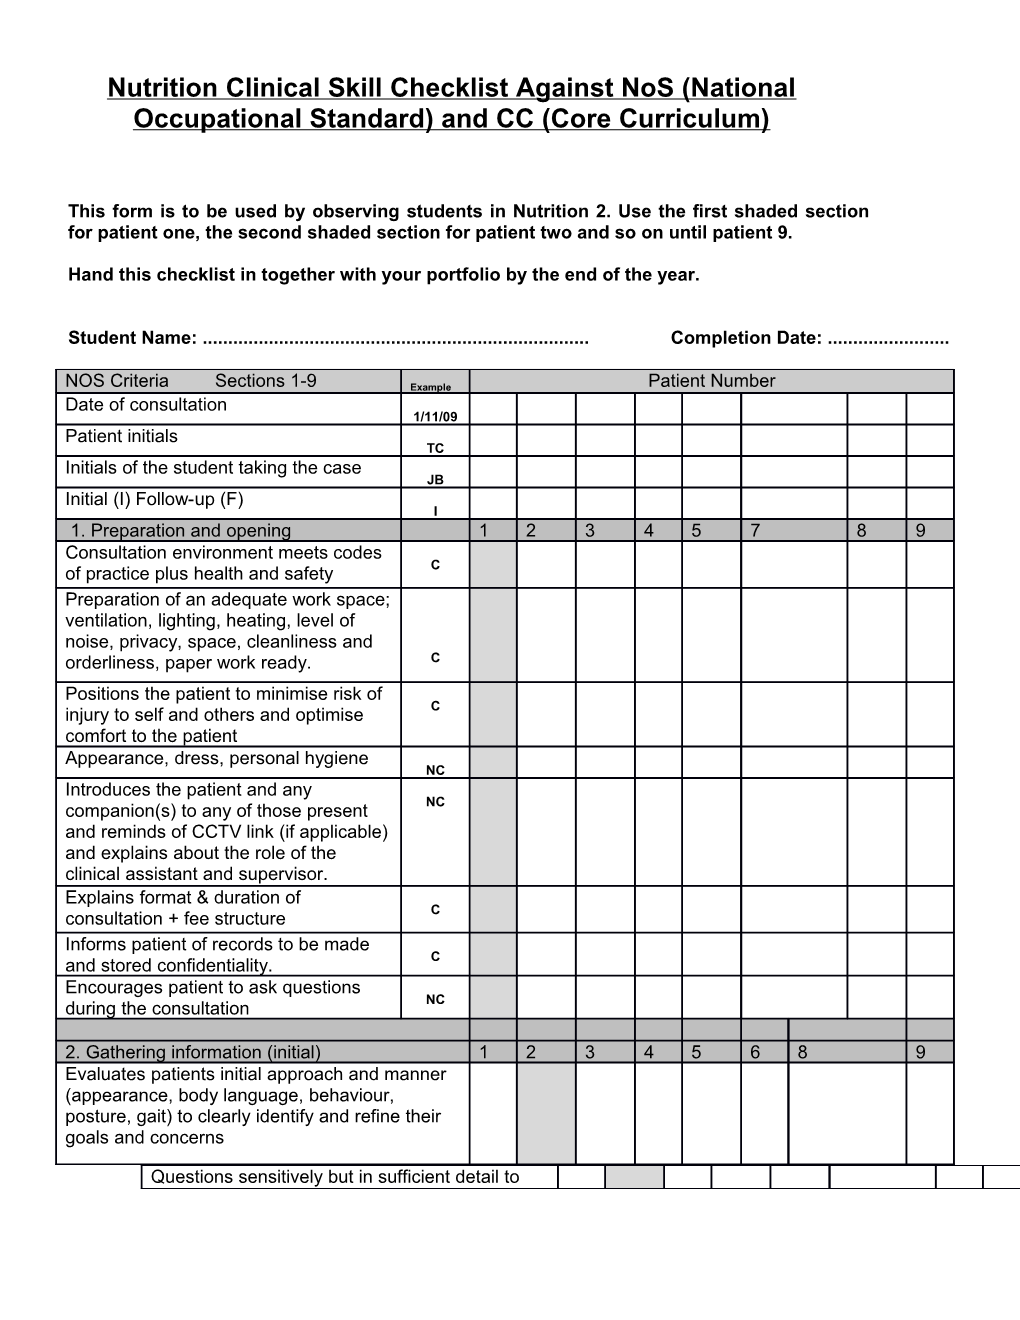 Nutrition Clinical Skill Checklist Againstnos (National Occupational Standard) and CC